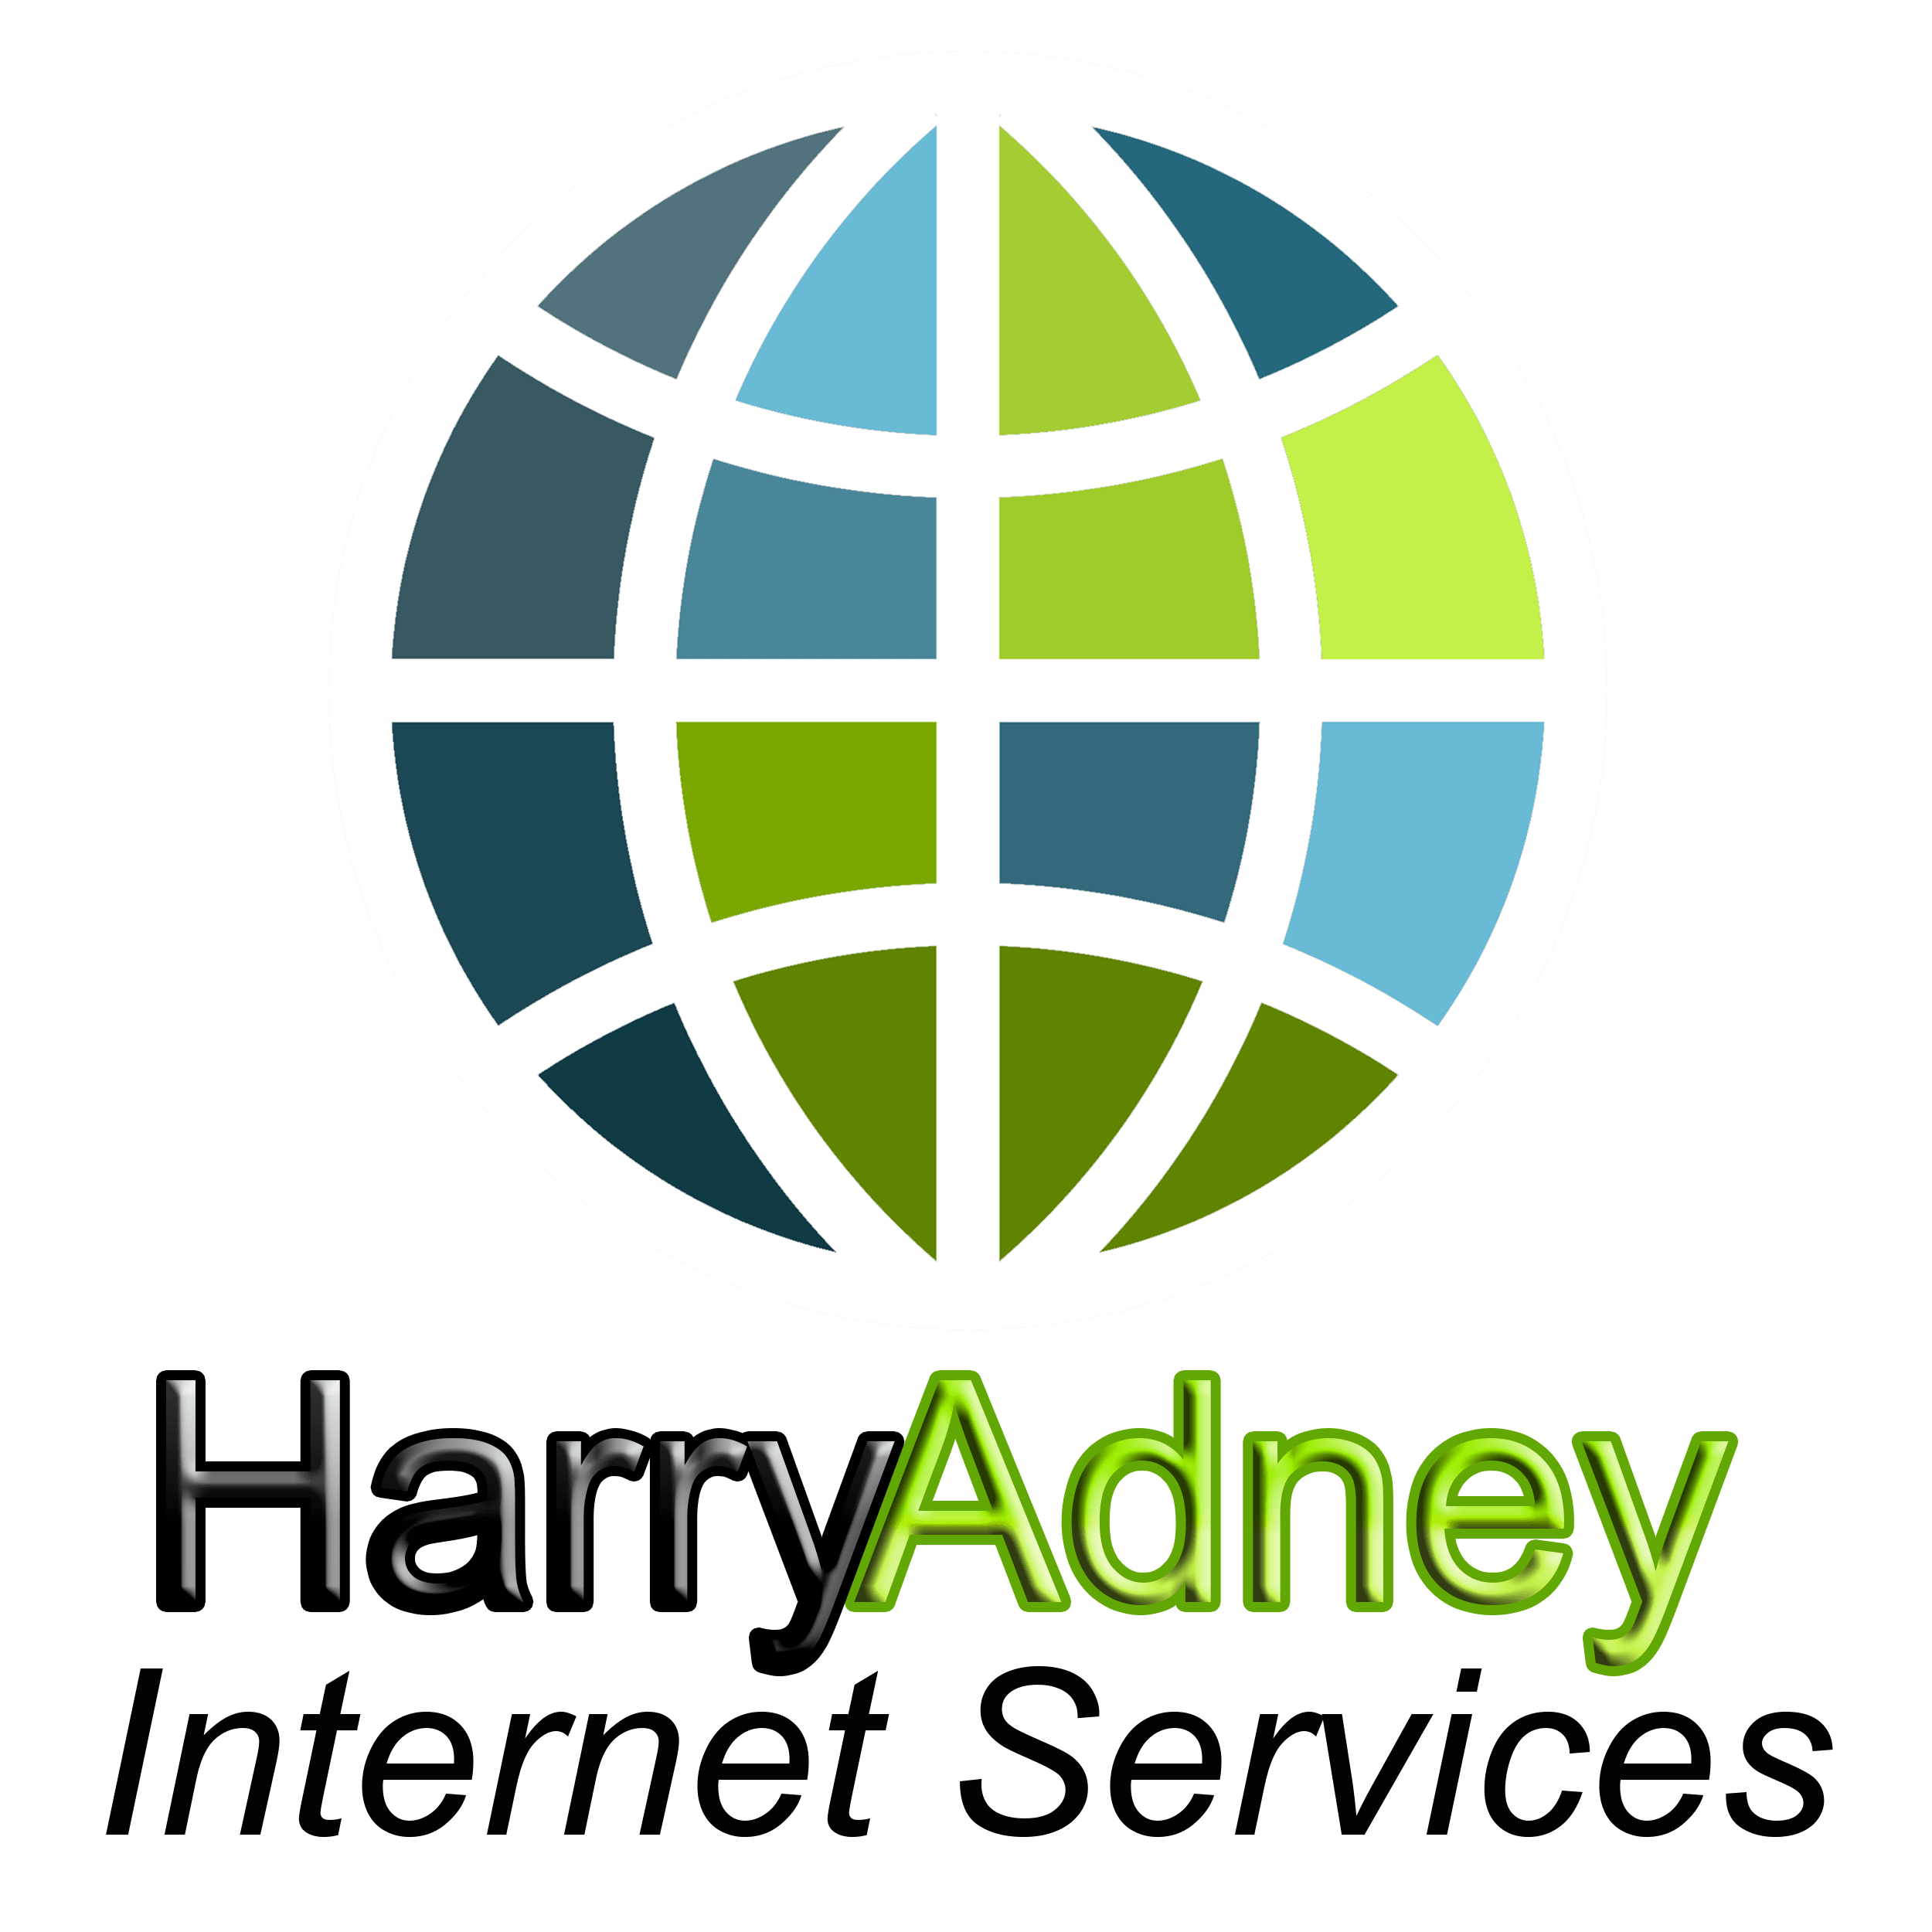 HarryAdney Web Design